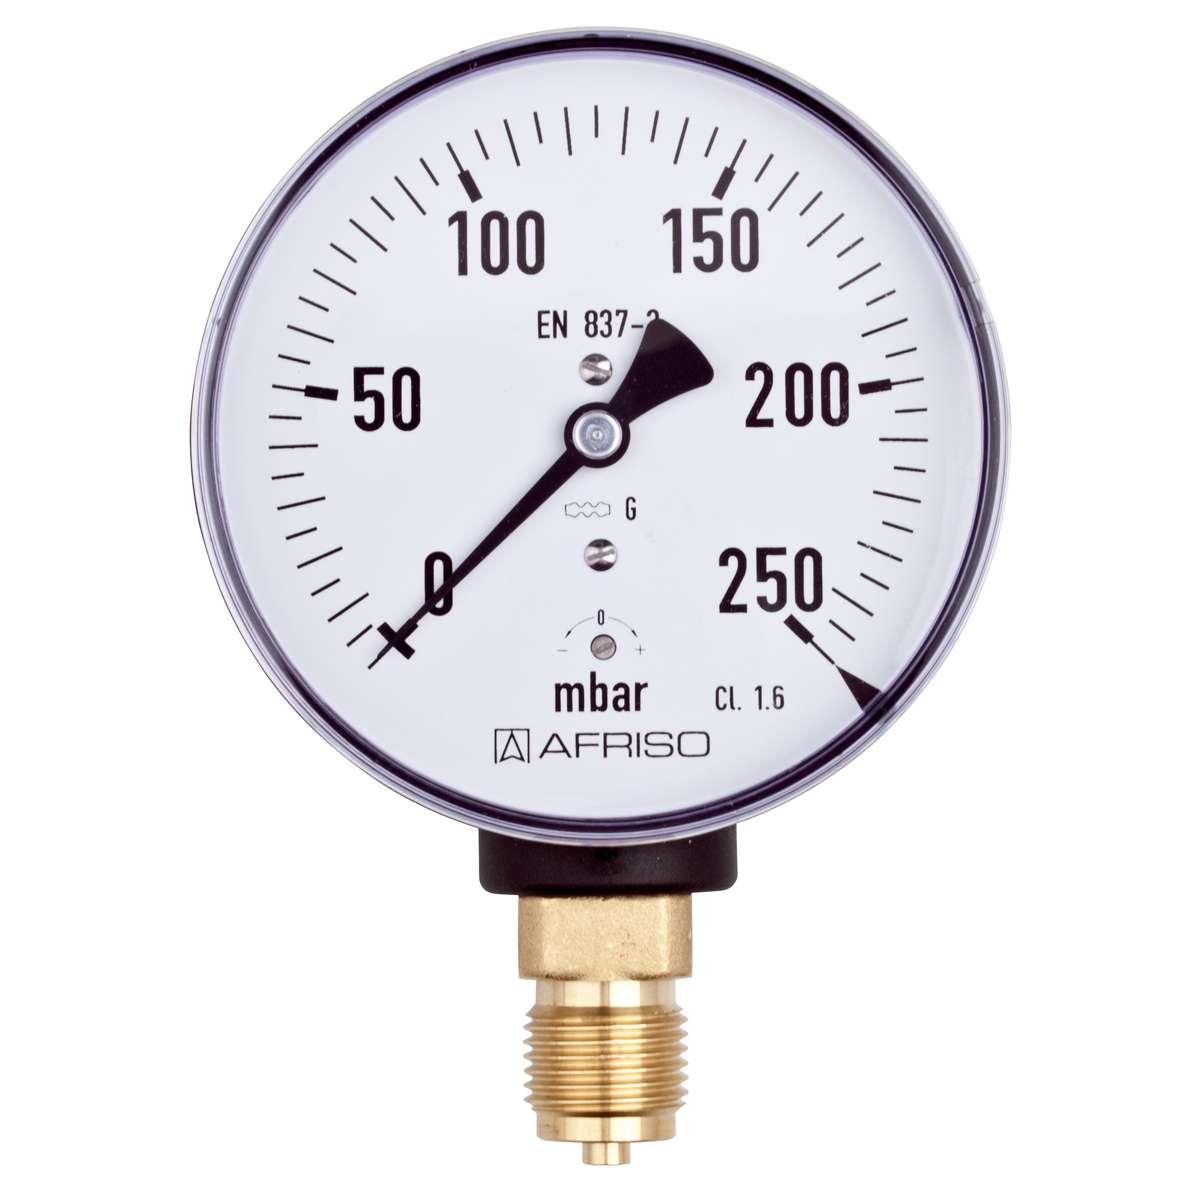 Manometr KP 100 pro plynná média, Ø 100 mm, 0 ÷ 1000 mbar, G½", radiální, typ D2 - AFRISO.CZ